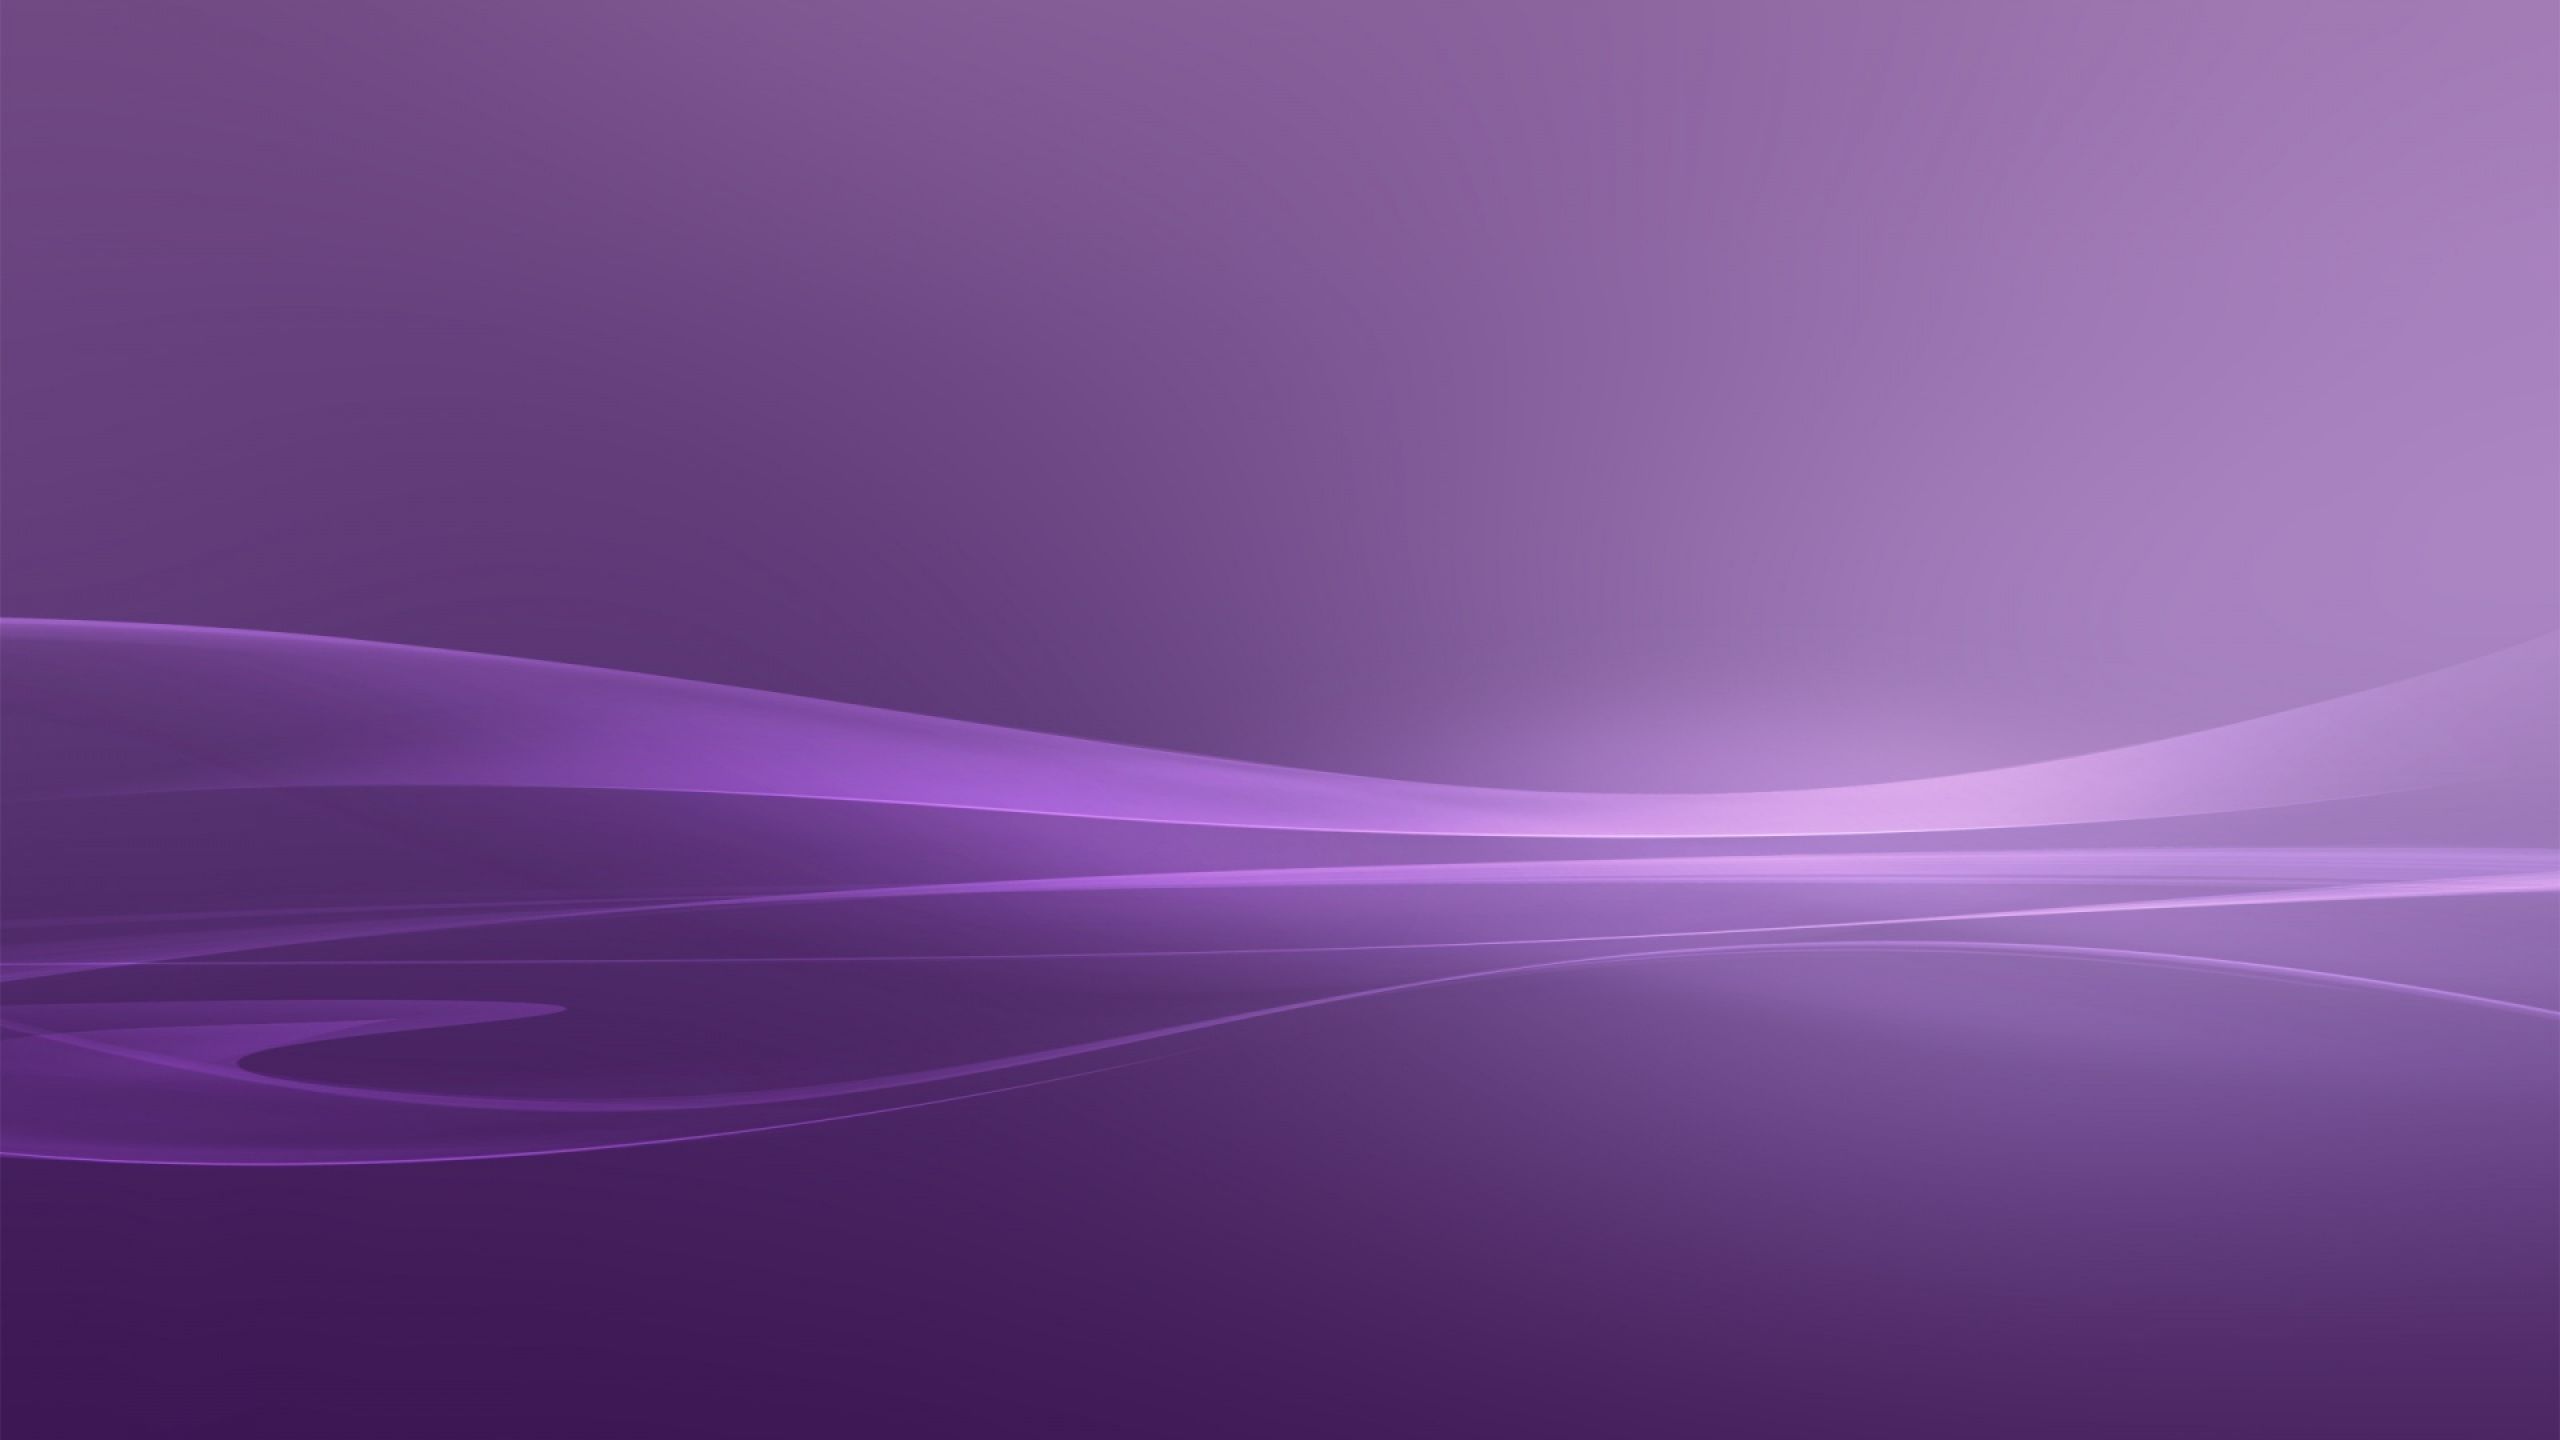 Download Wallpaper 2560x1440 Purple, Light, Solid, Lines Mac iMac